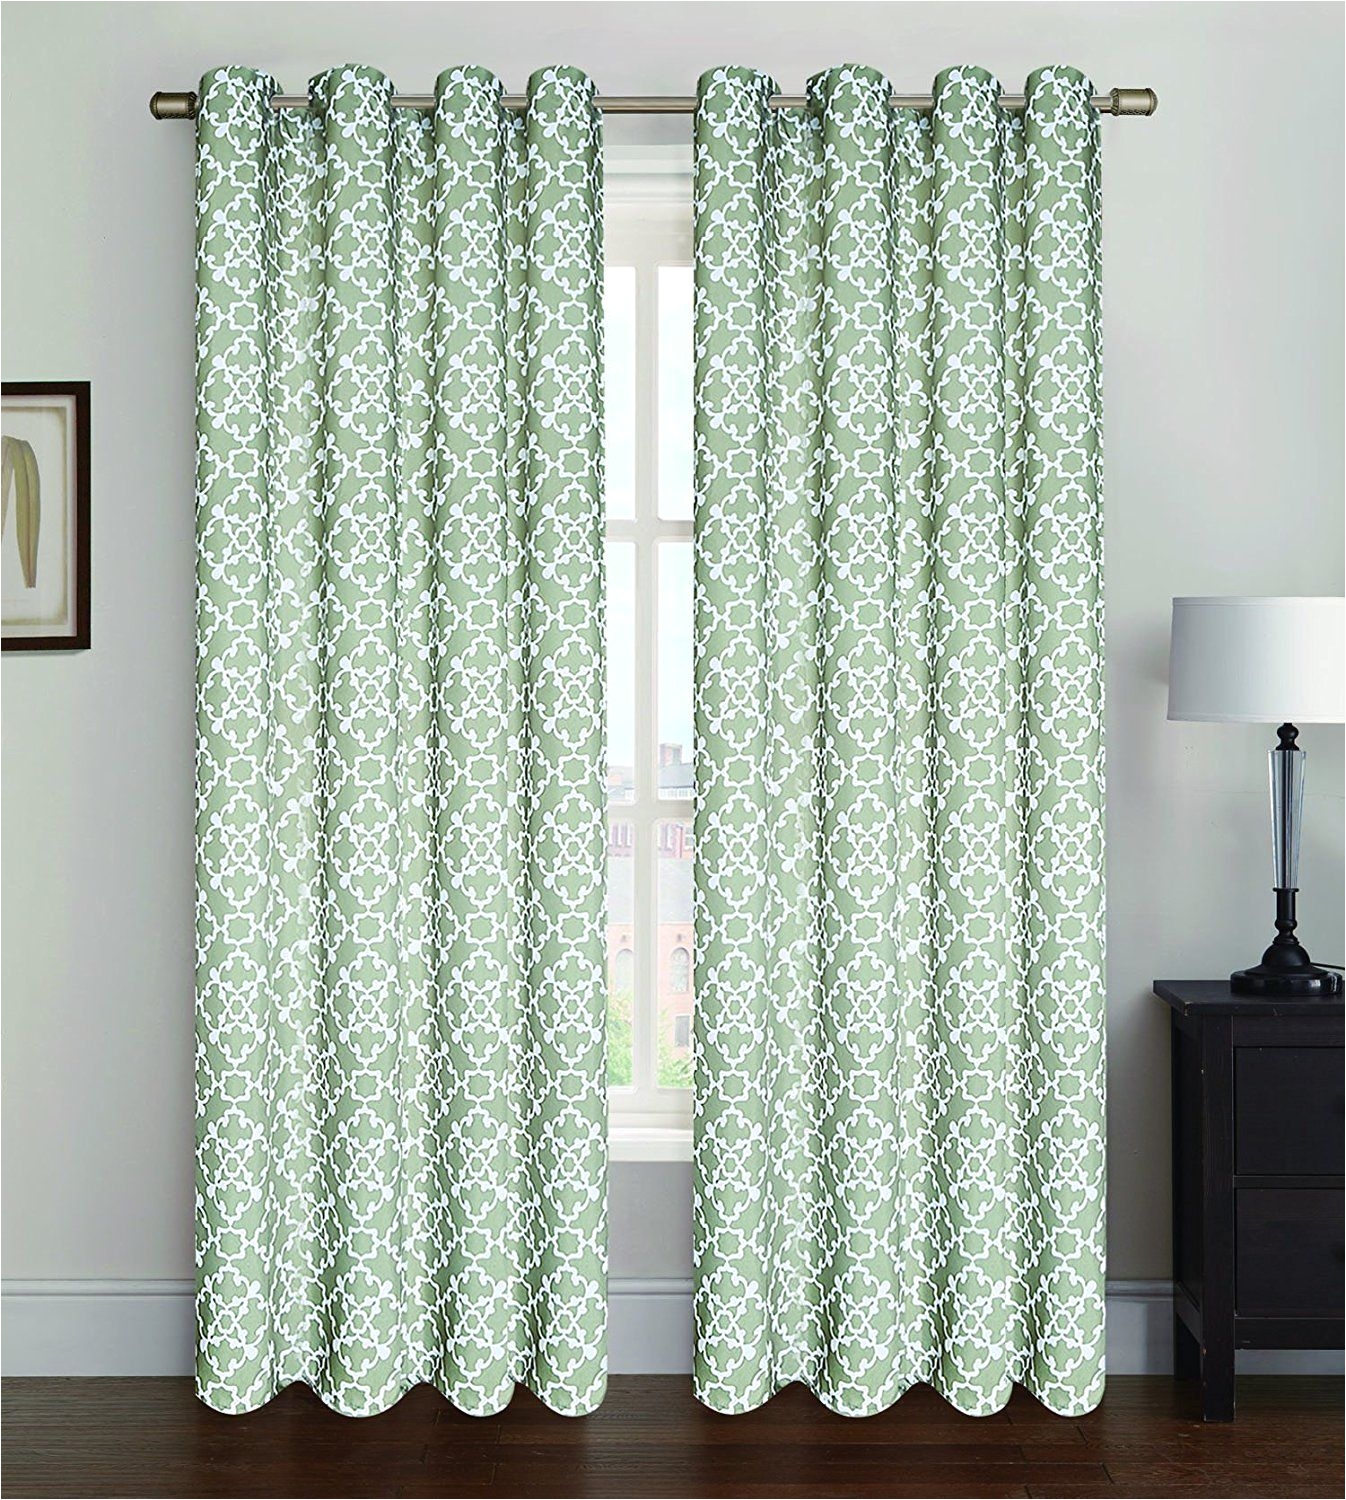 kashi home alex collection window treatment curtain panel 54 x 84 interwoven